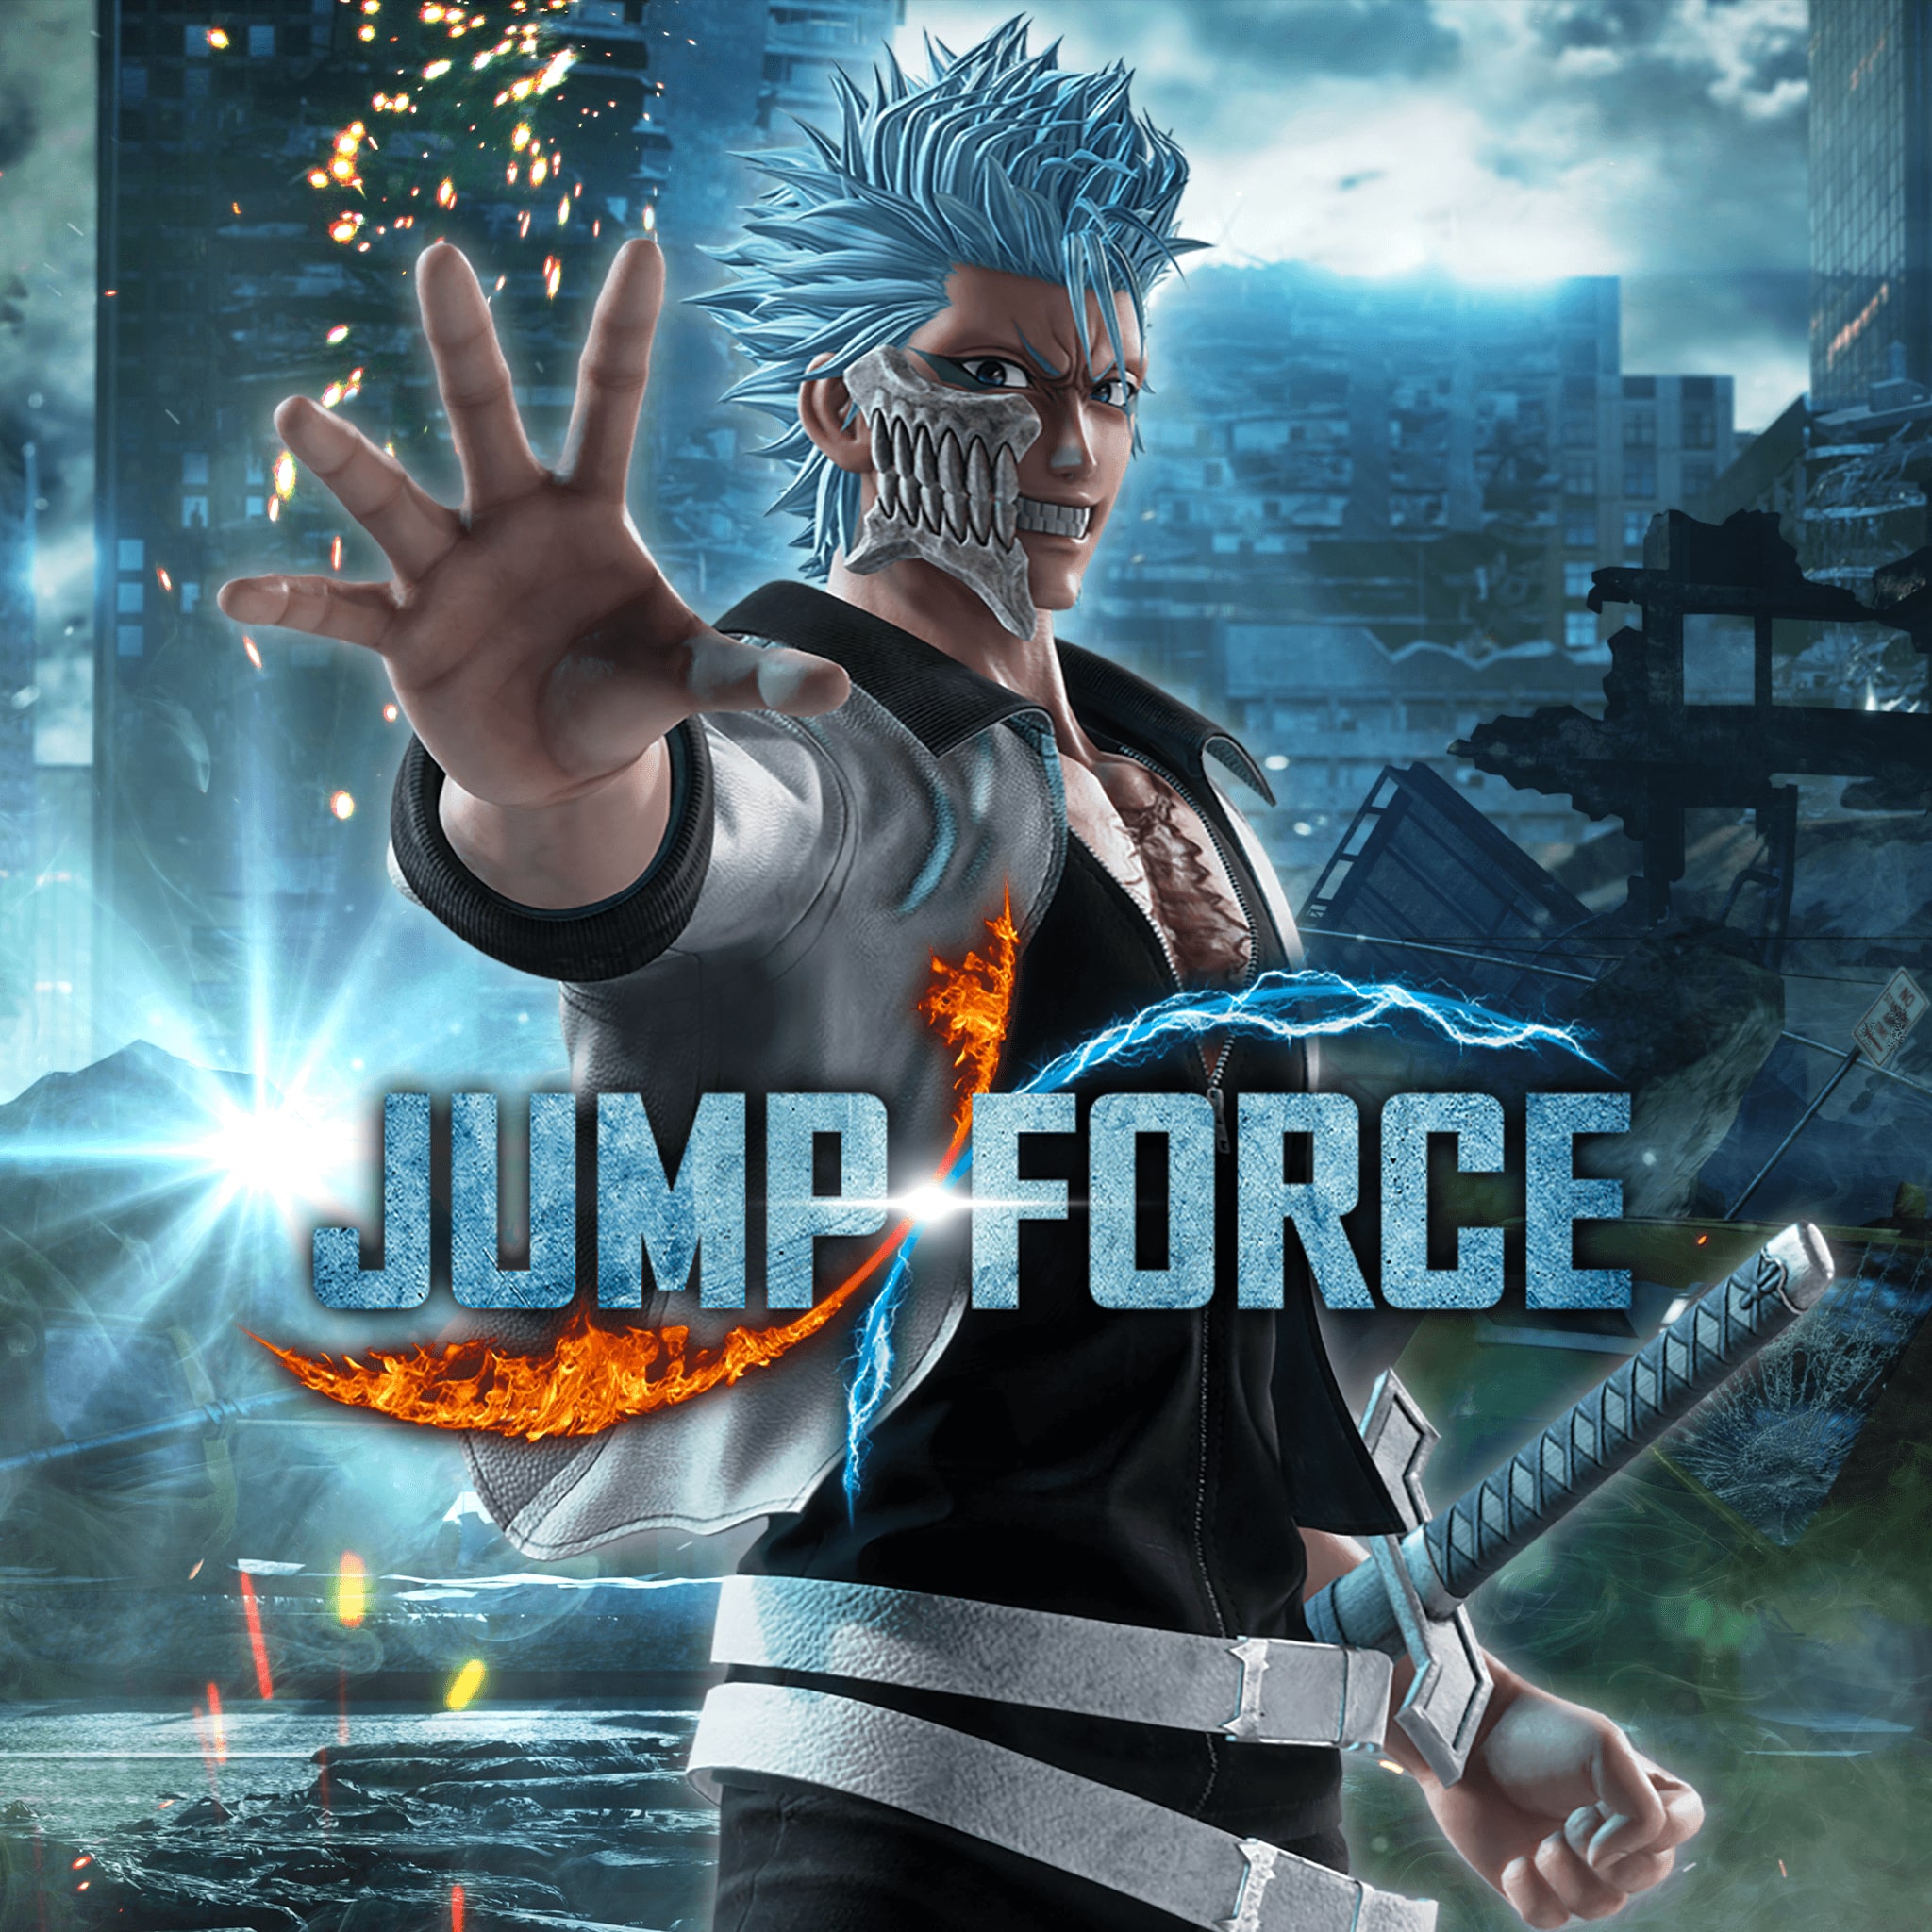 JUMP FORCE Character Pack 8: Grimmjow Jaegerjaquez